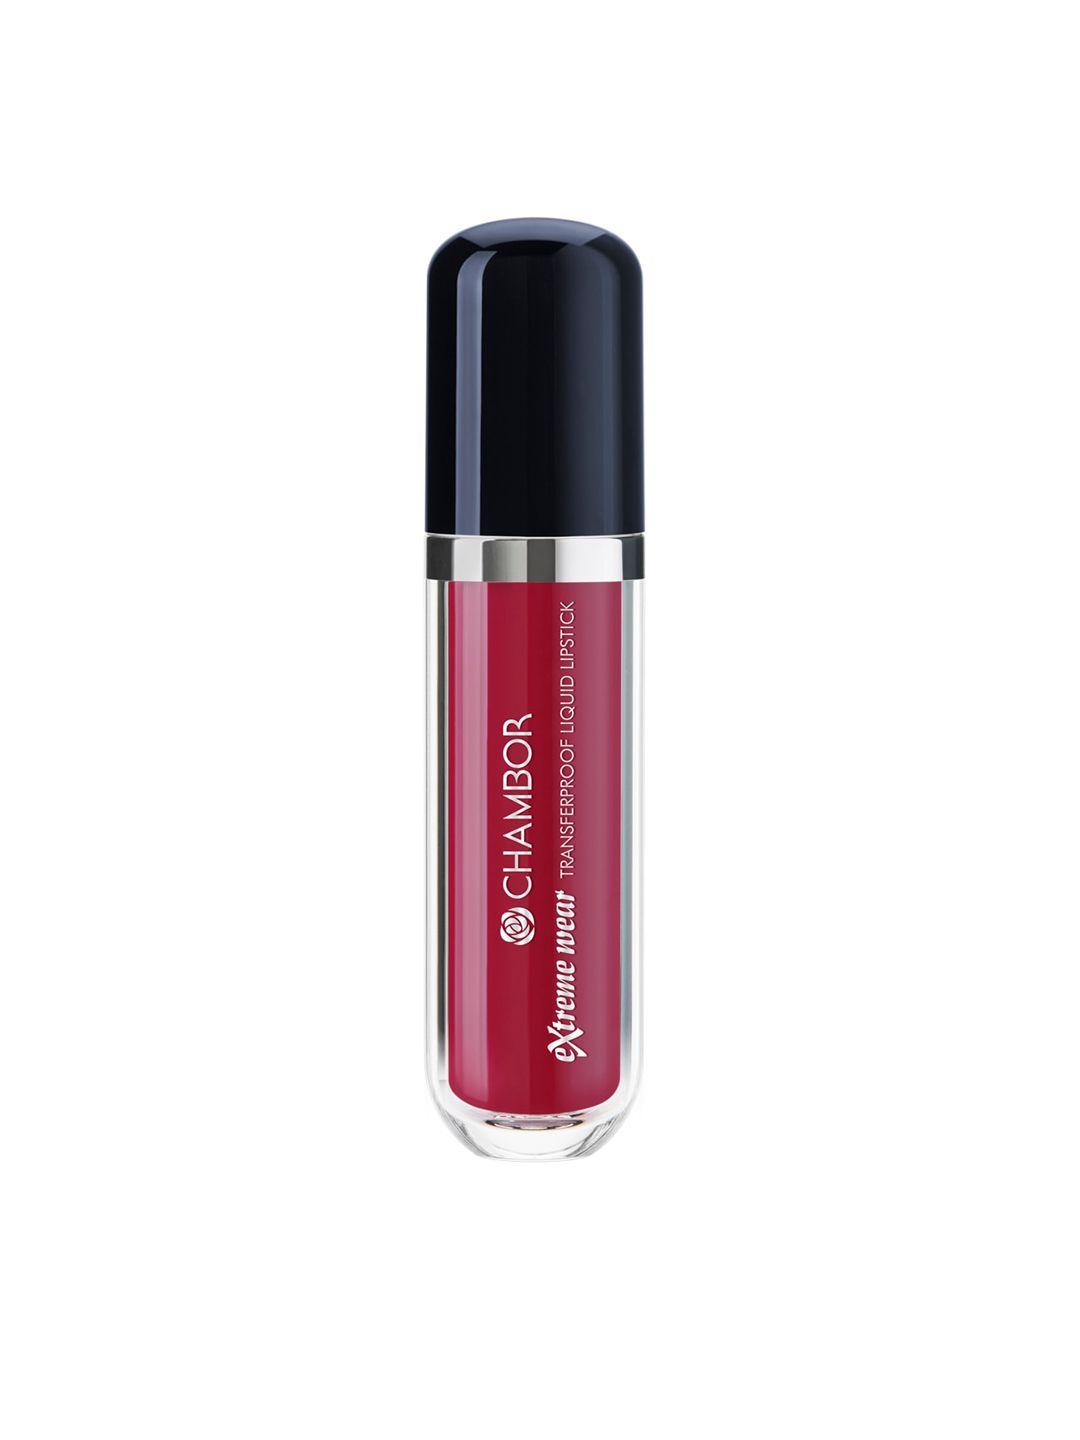 chambor extreme wear transferproof liquid lipstick - rosewood #413 6 ml